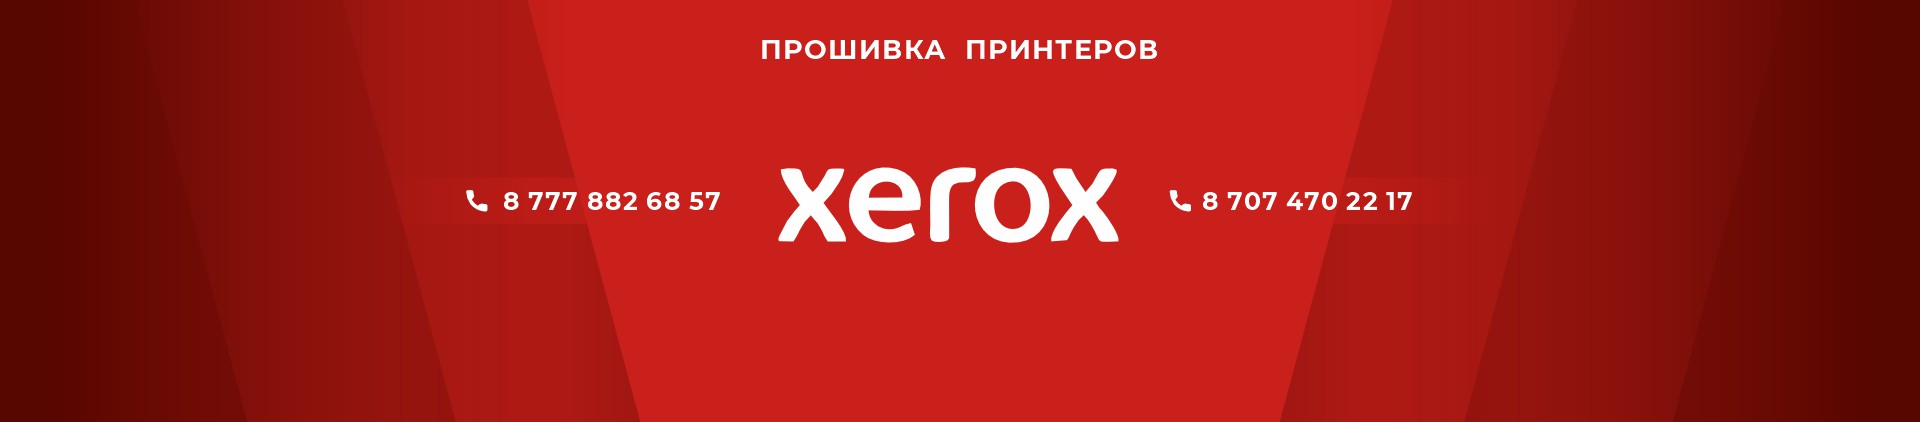 прошивка принтеров Xerox